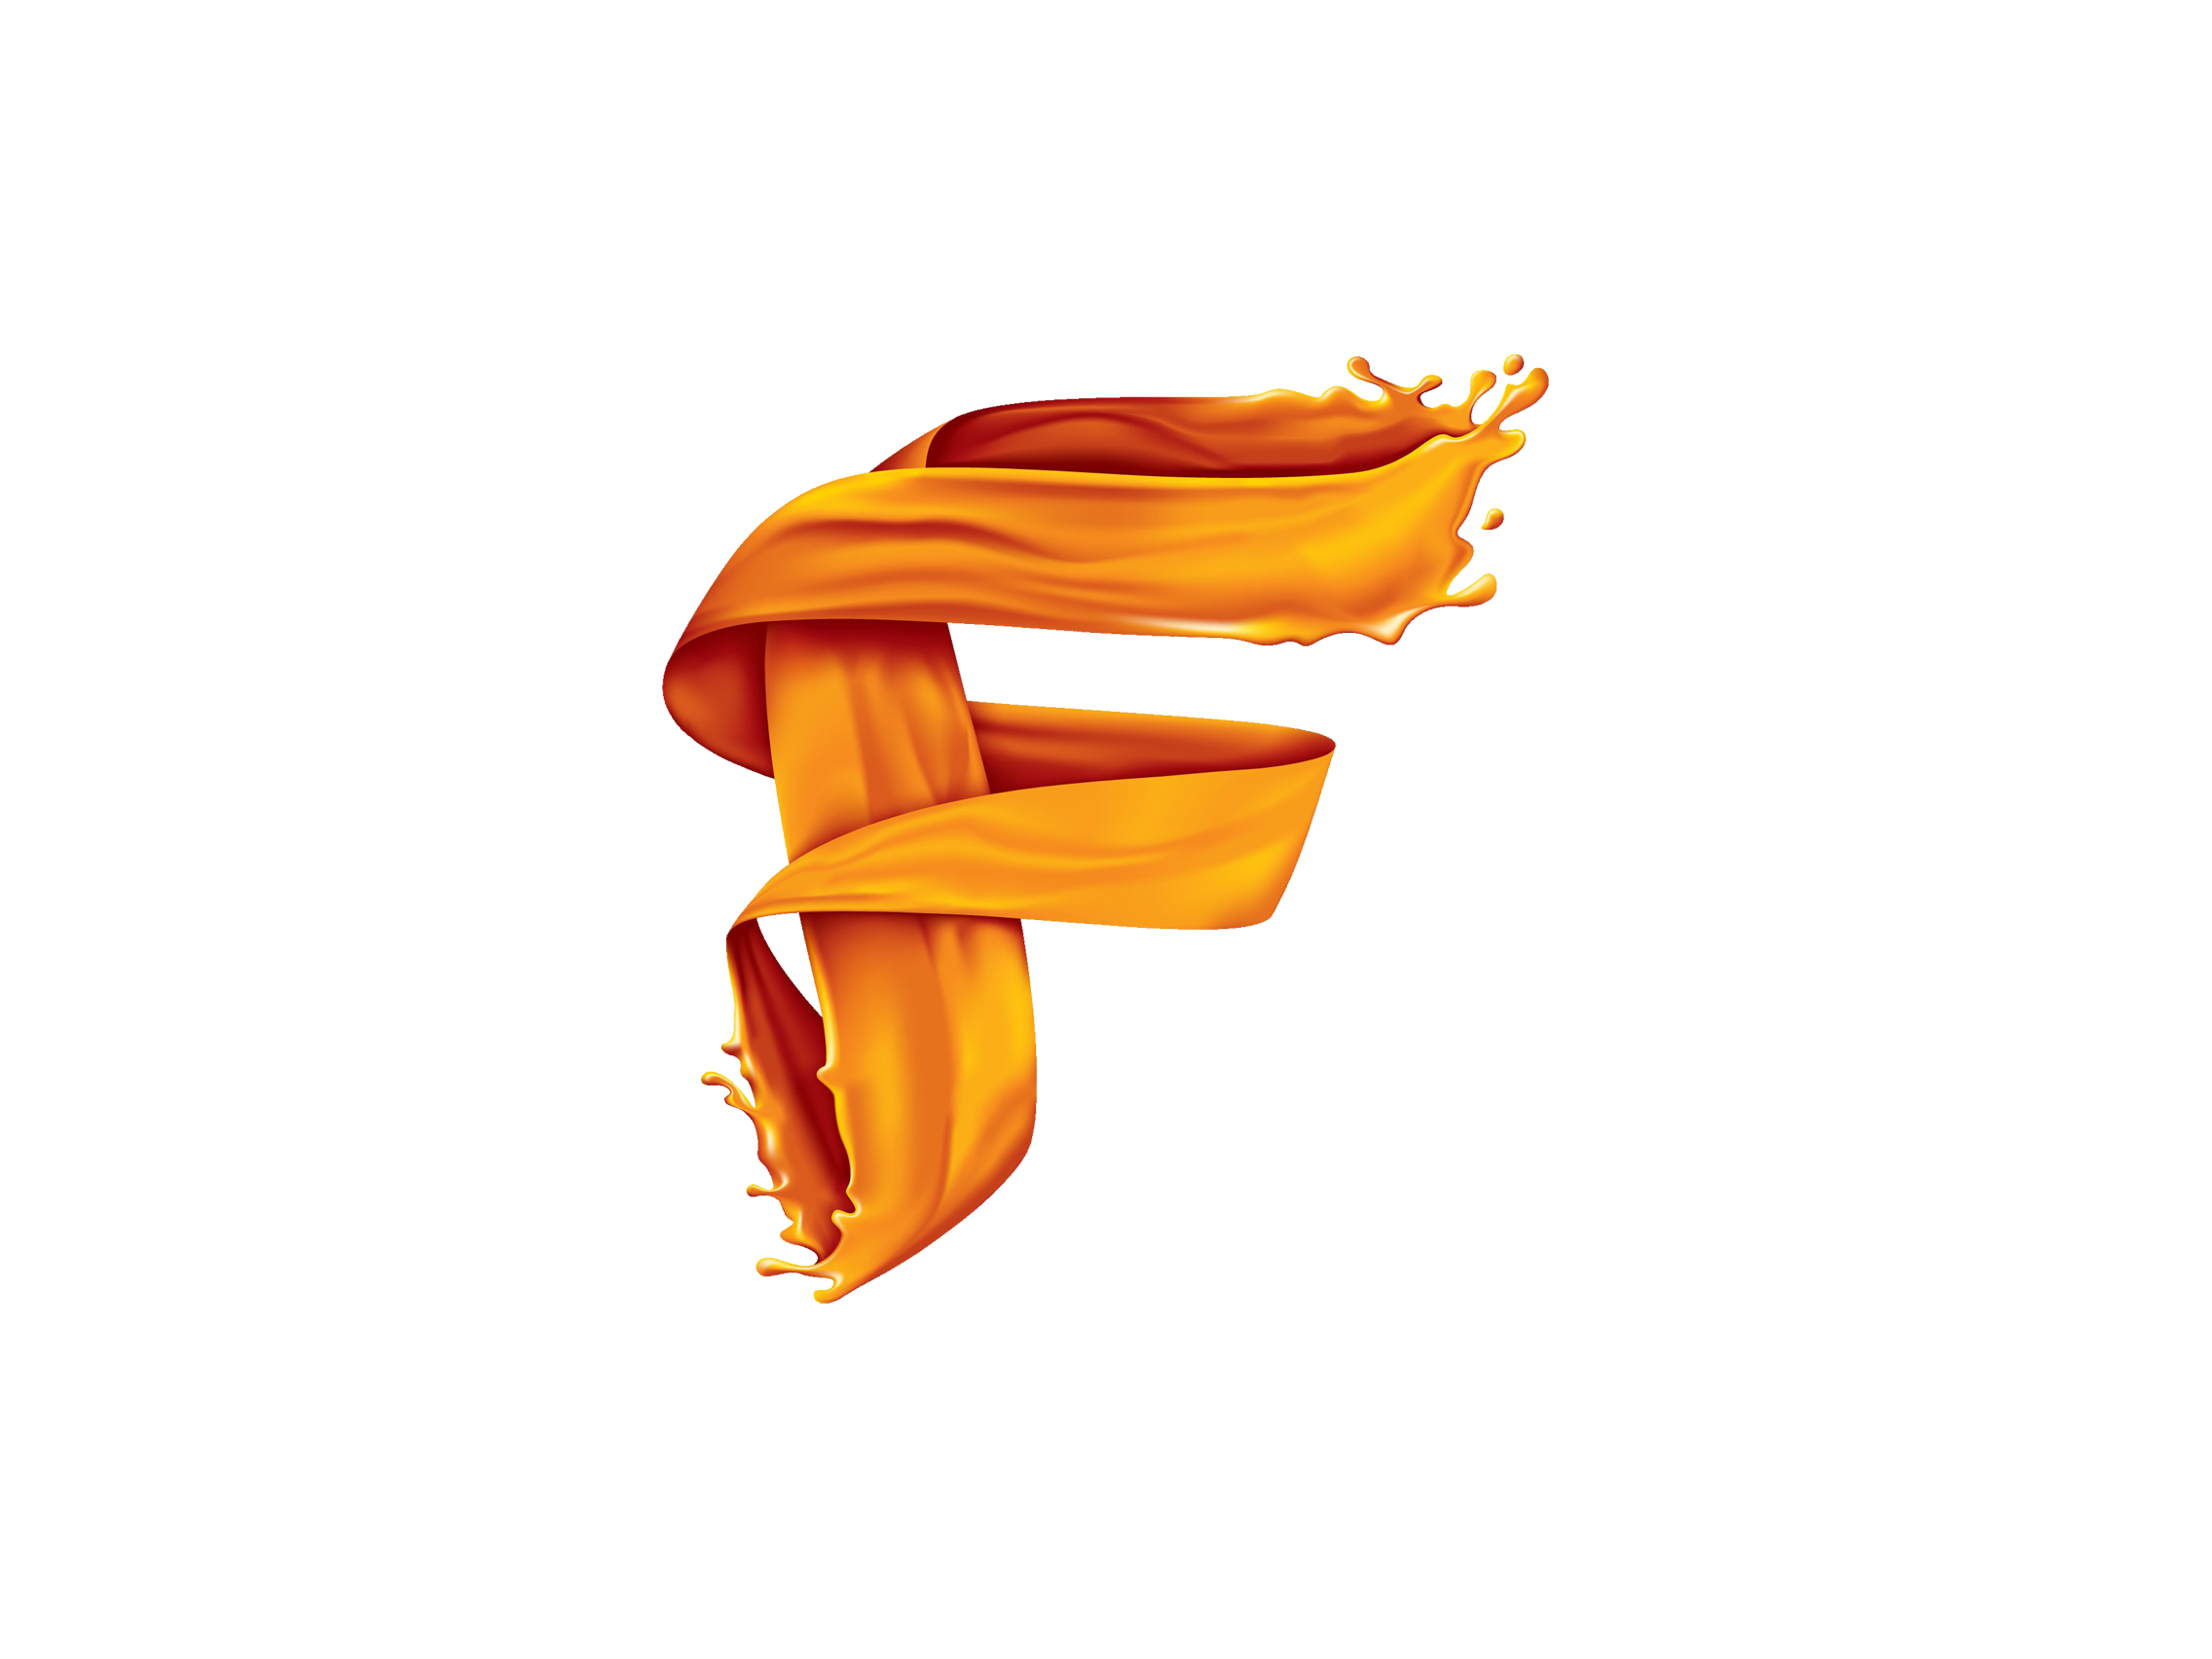 F Letter Logo Png - Free Transparent PNG Logos